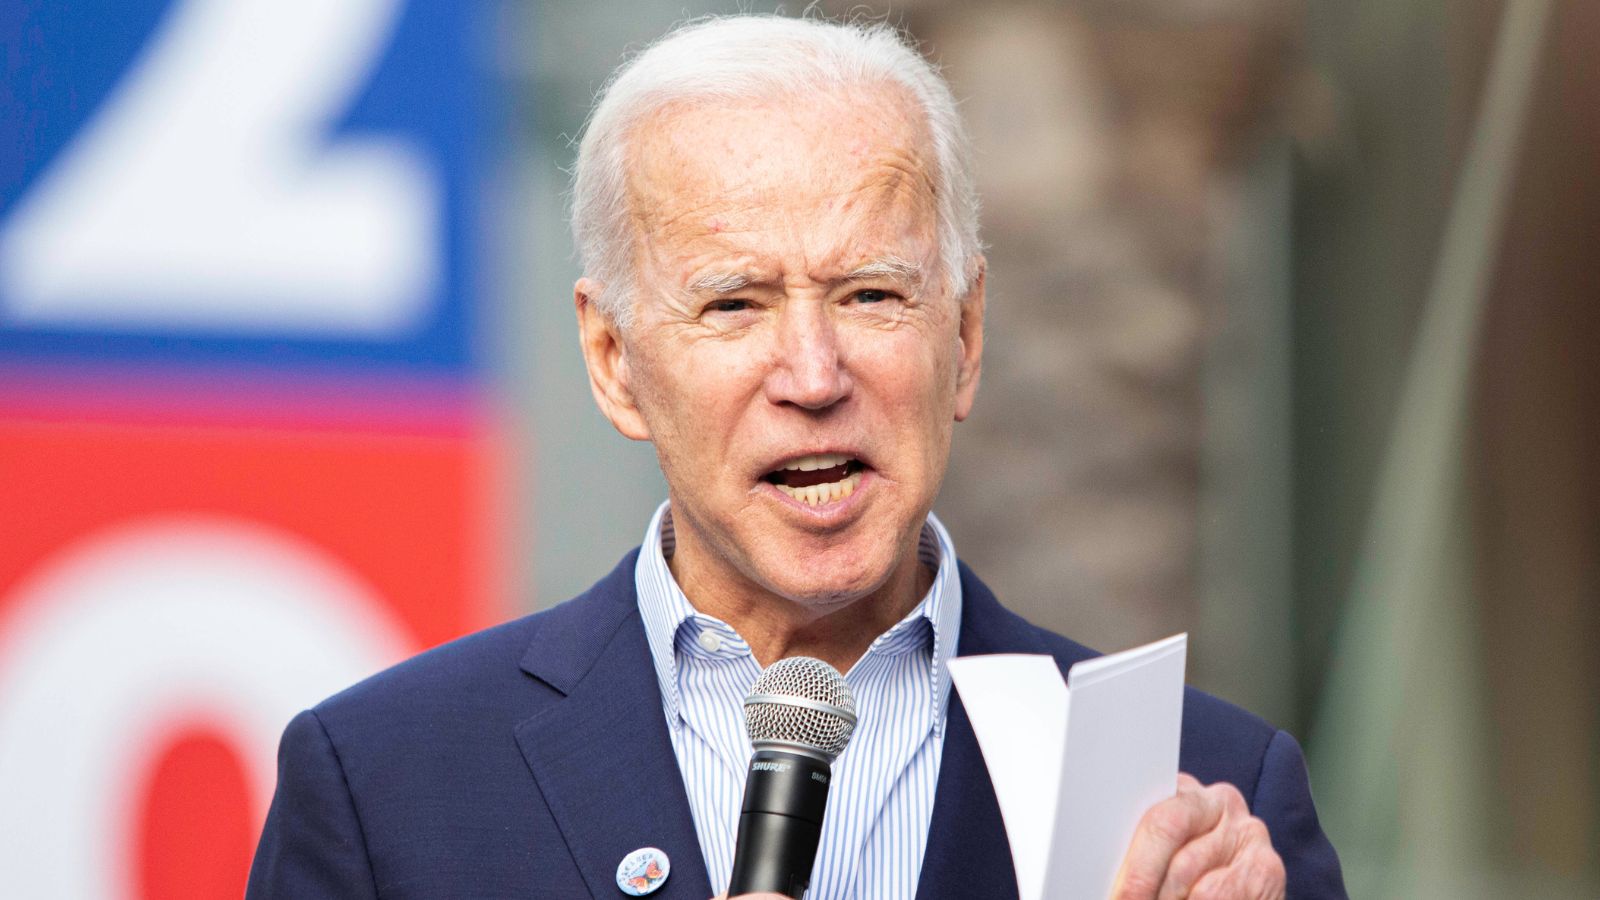 Democrat’s Next Move? Political Scientist Hints at Biden’s Potential Successor Being Groomed